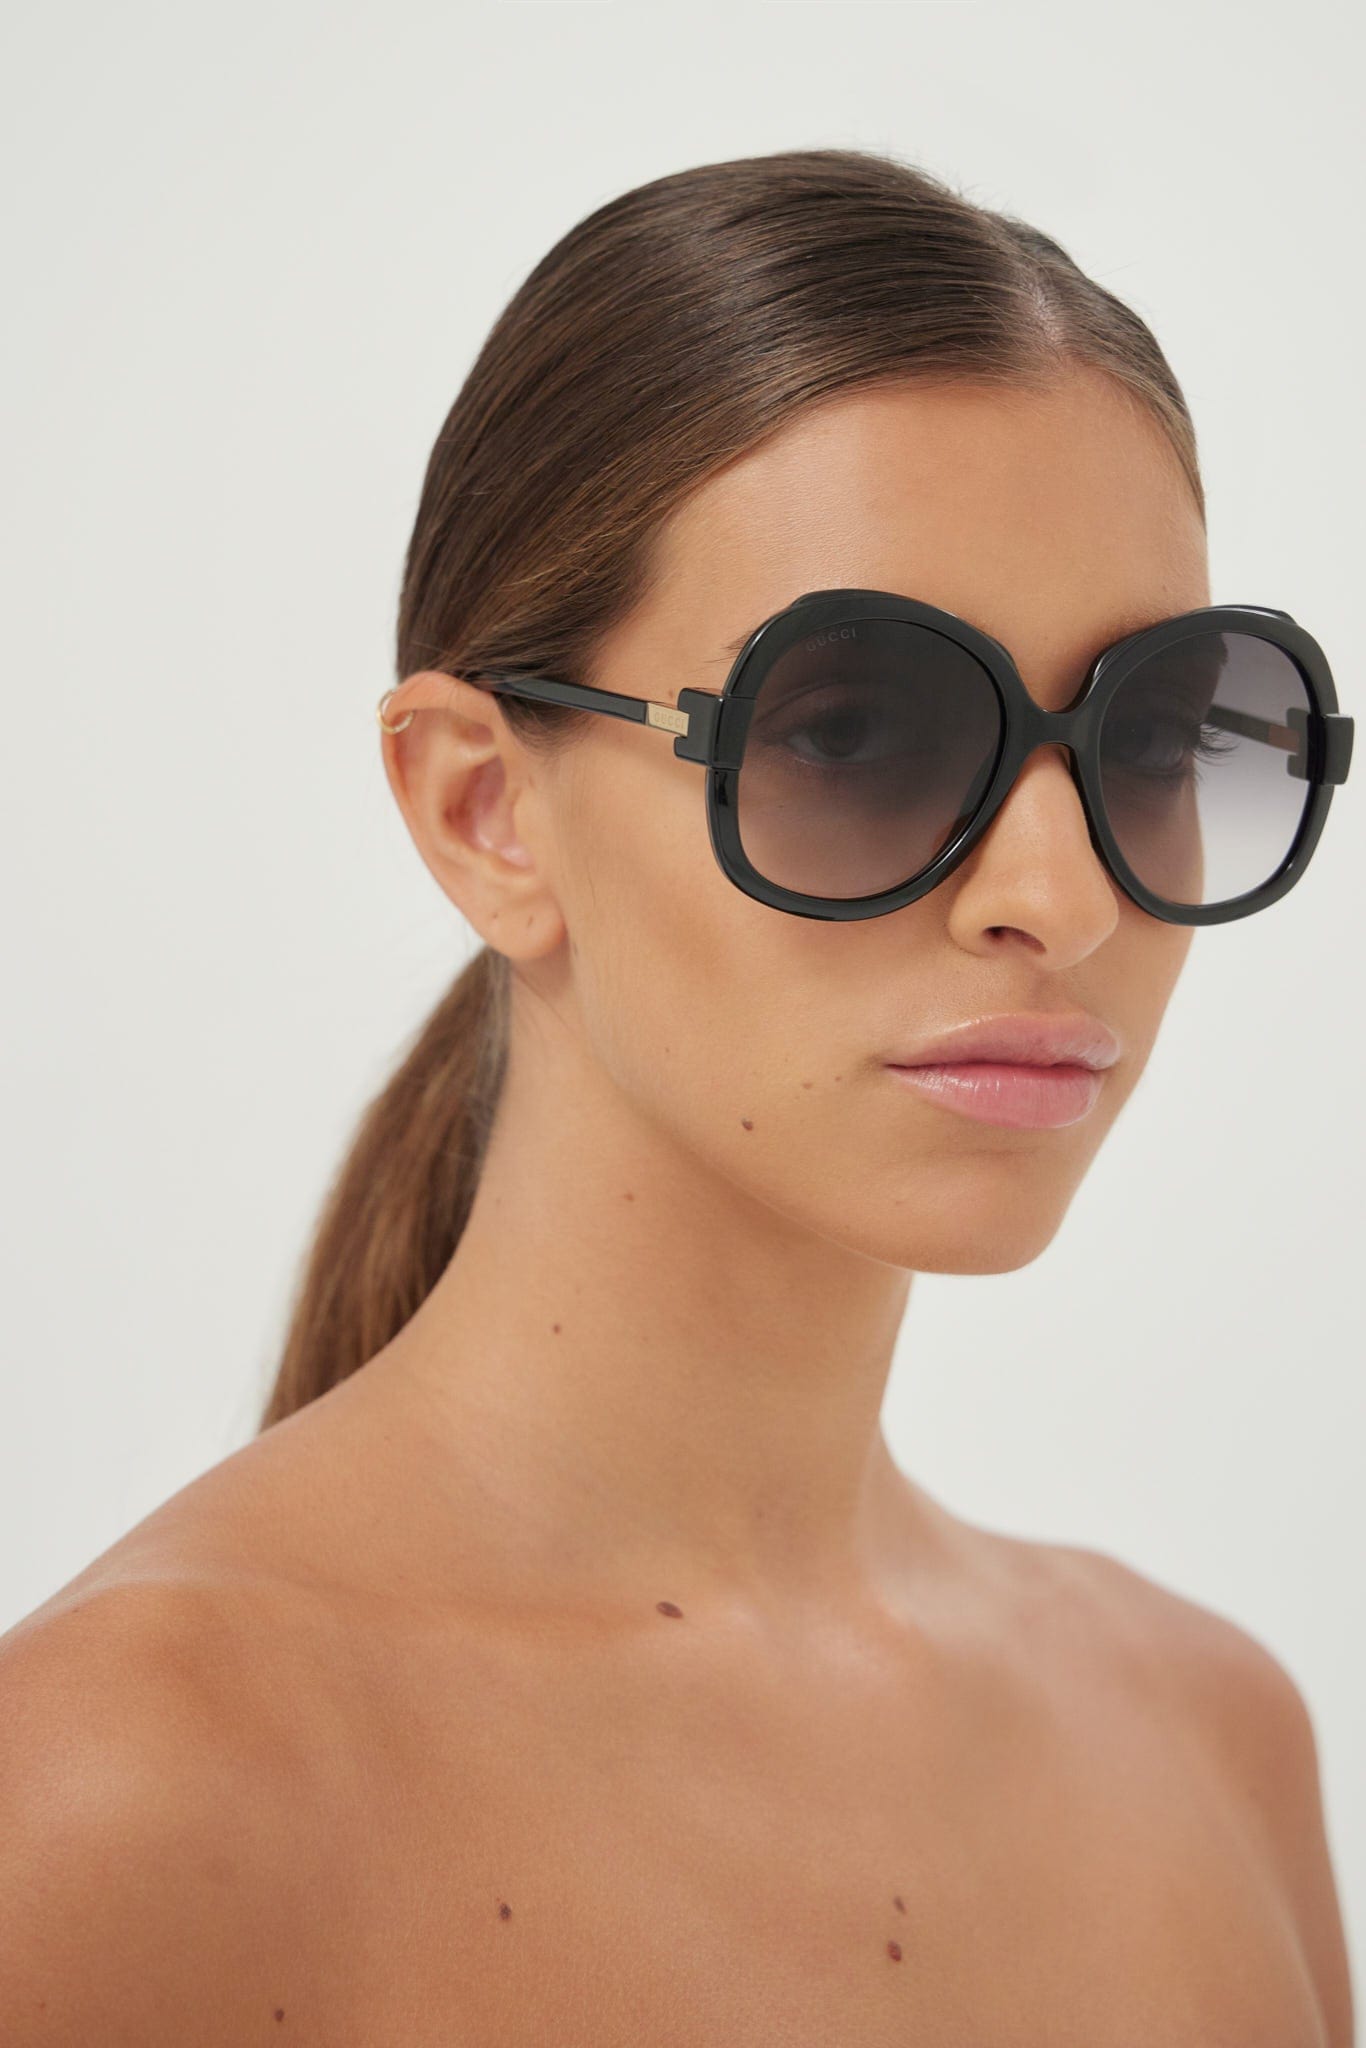 Gucci black round shape sunglasses - Eyewear Club